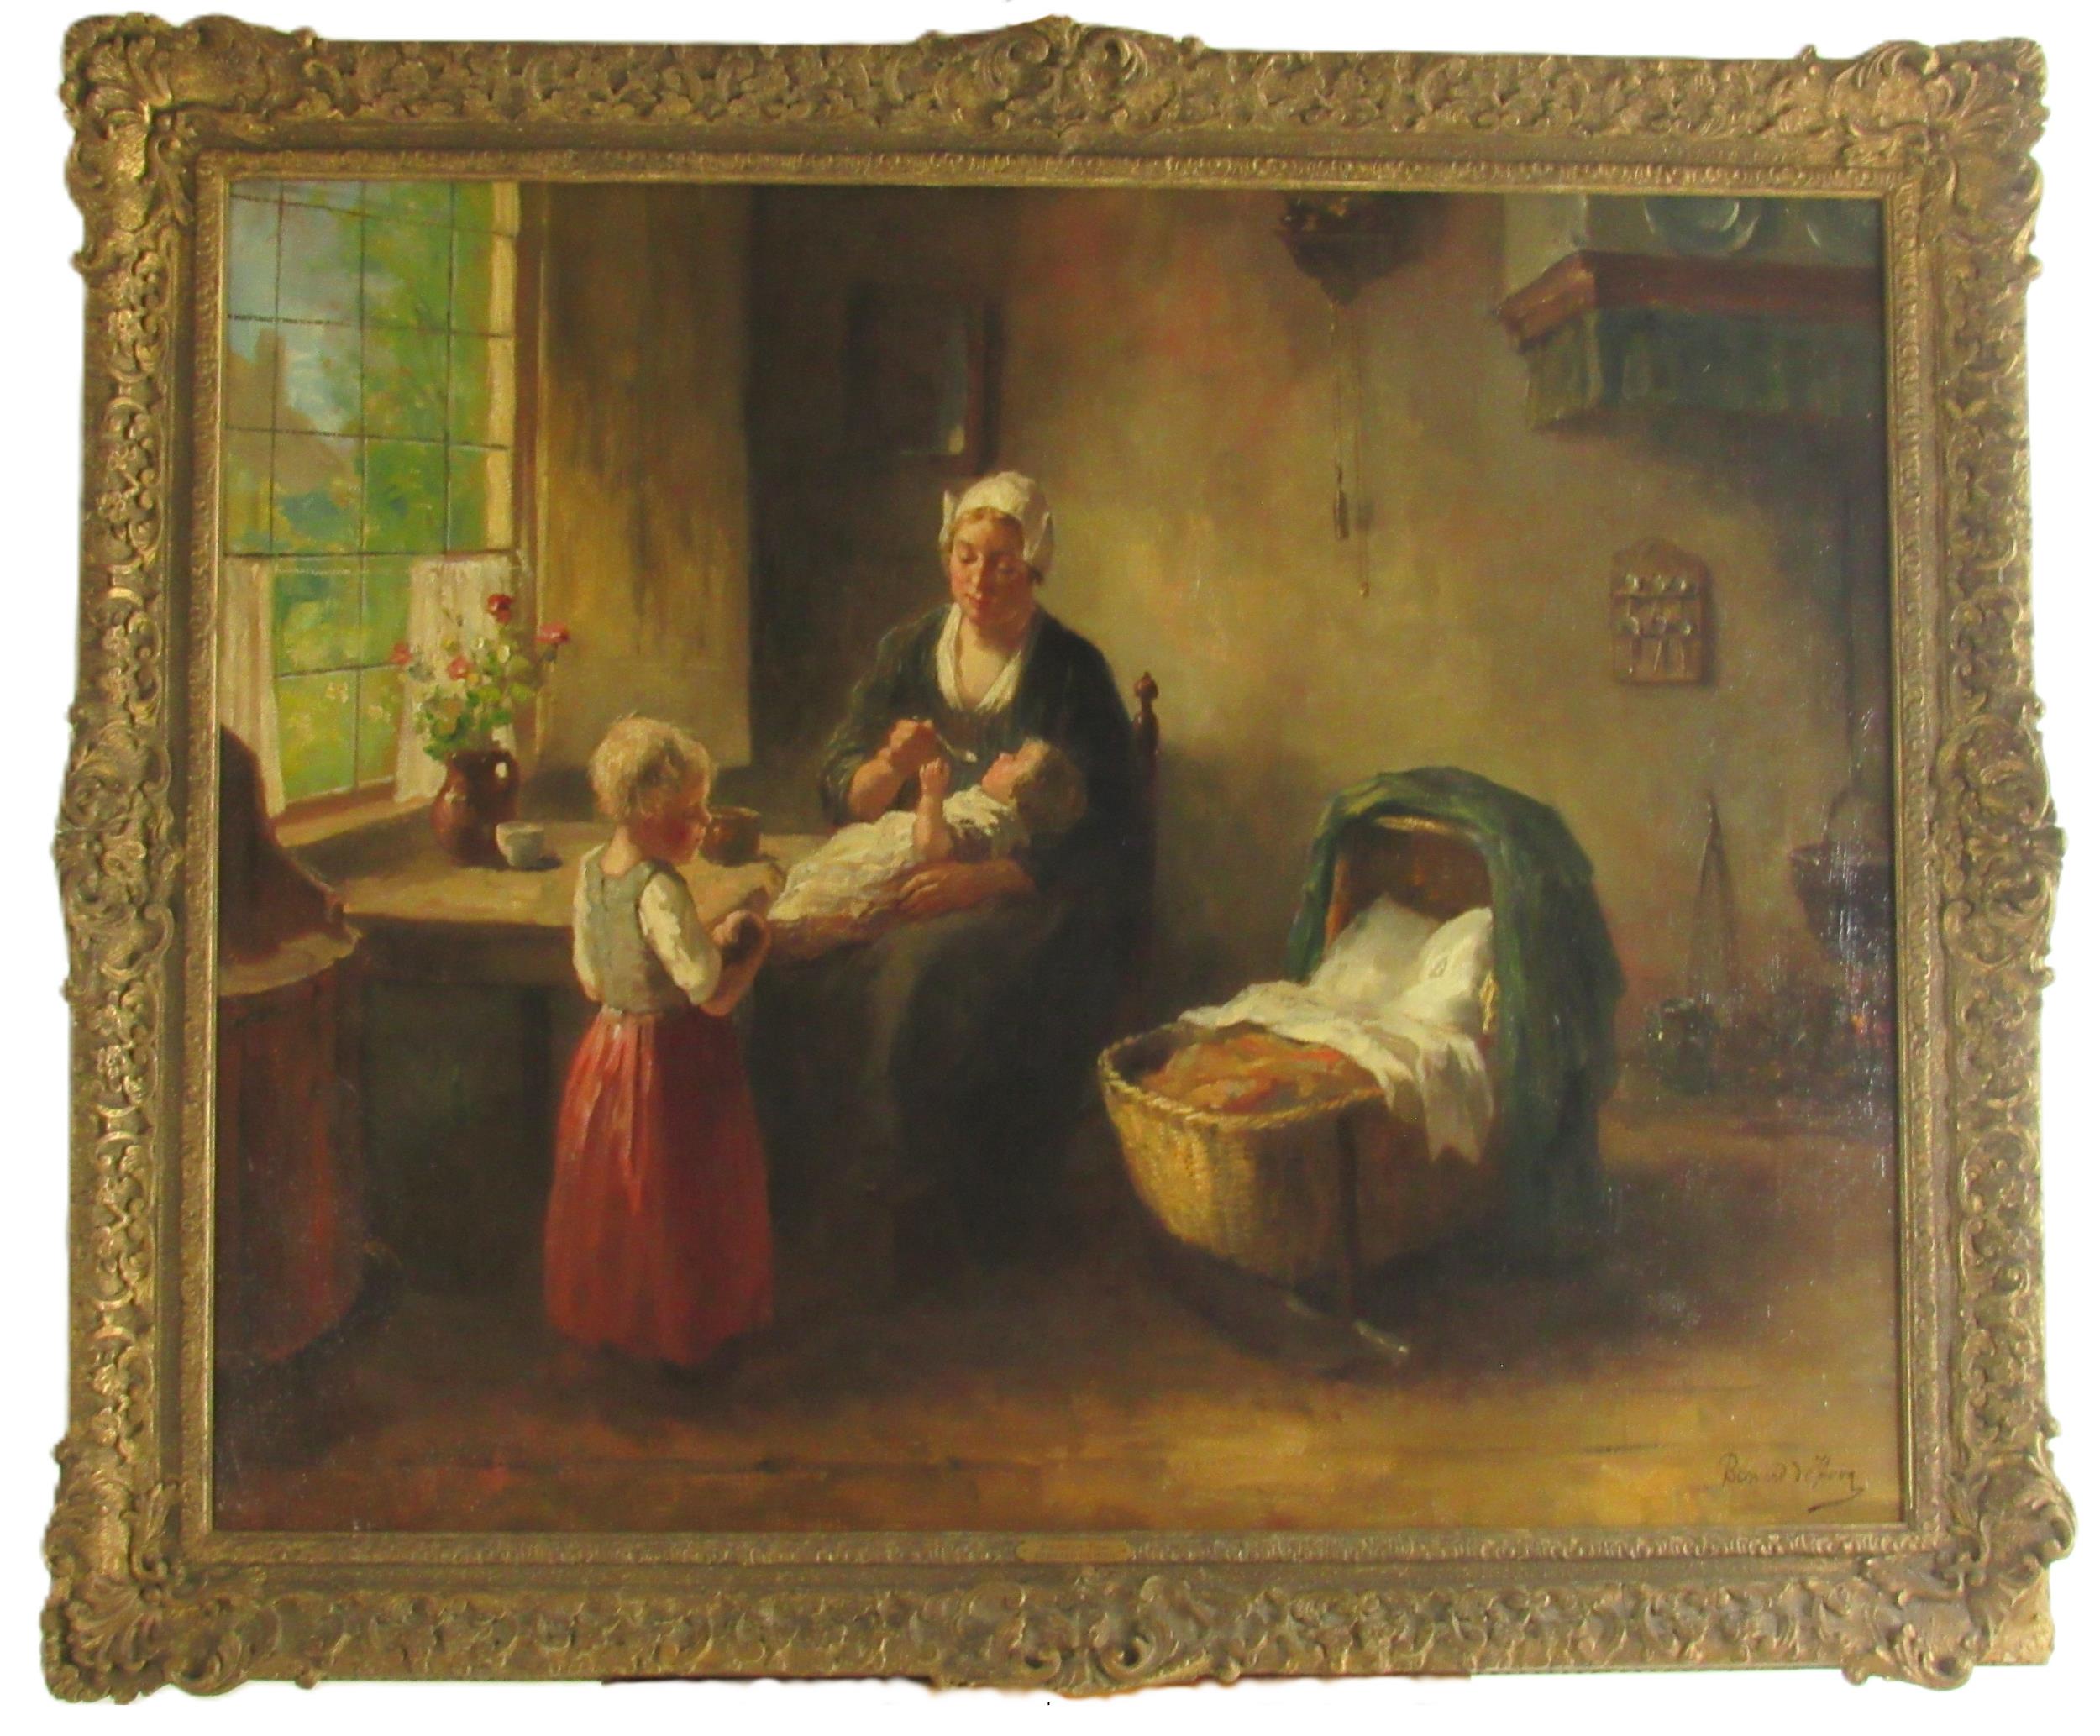 Bernard de Hoog, Dutch (1867-1943) "Breakfast Time, O.O.C., large interior scene with Mother feeding